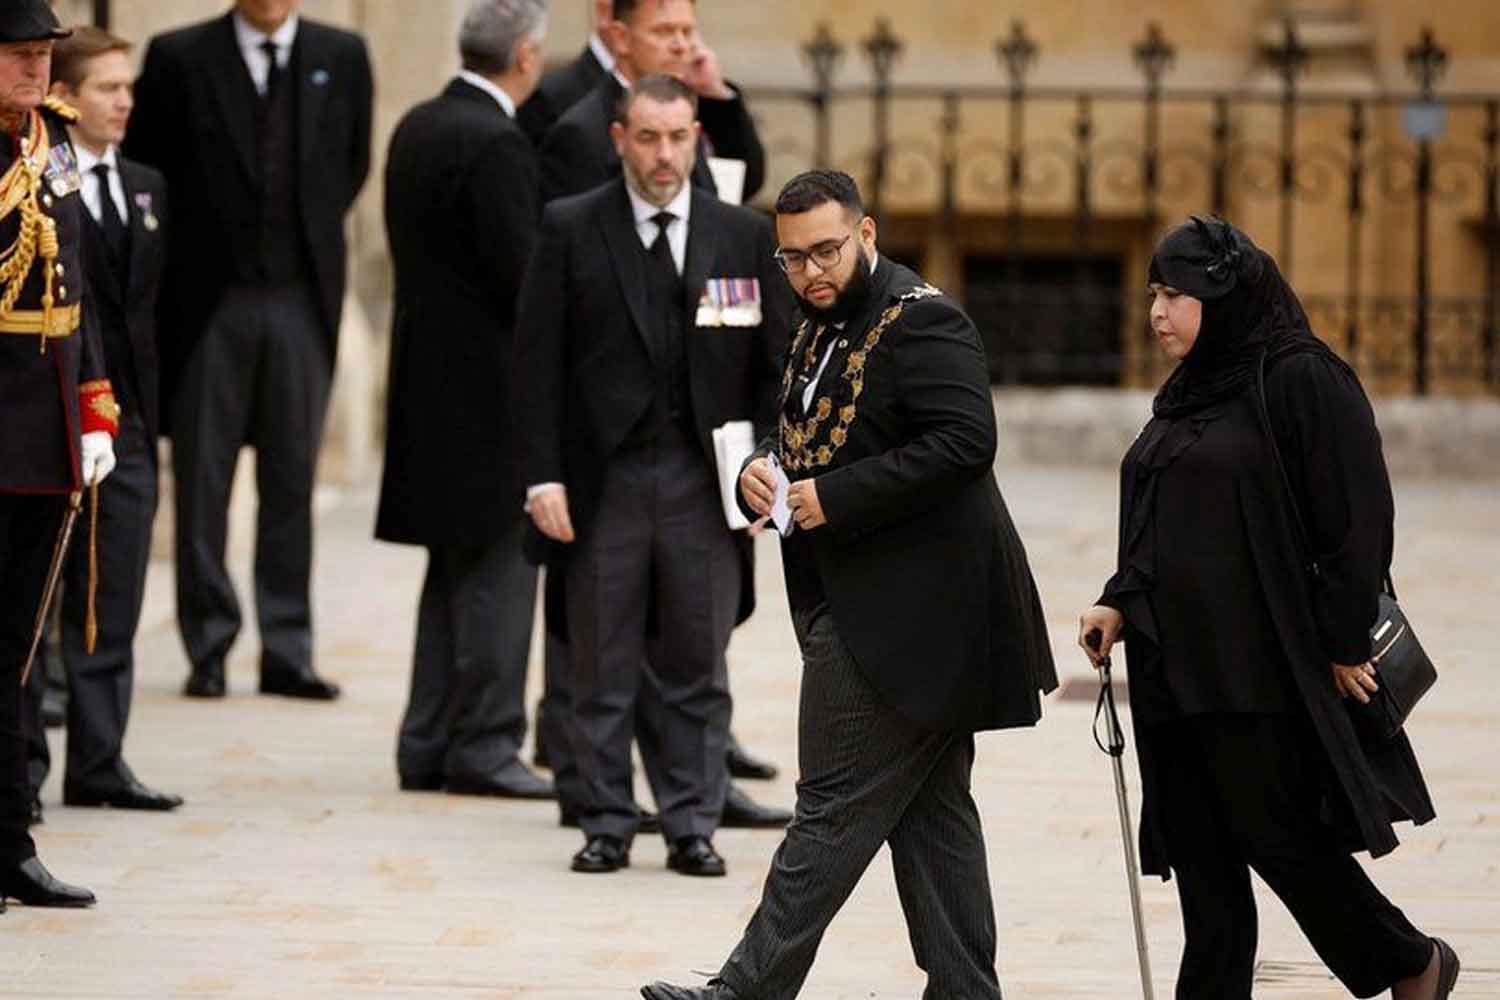 Disangka menyamar sebagai Datuk Bandar, rupanya pemuda muslim ini merupakan VVIP di London